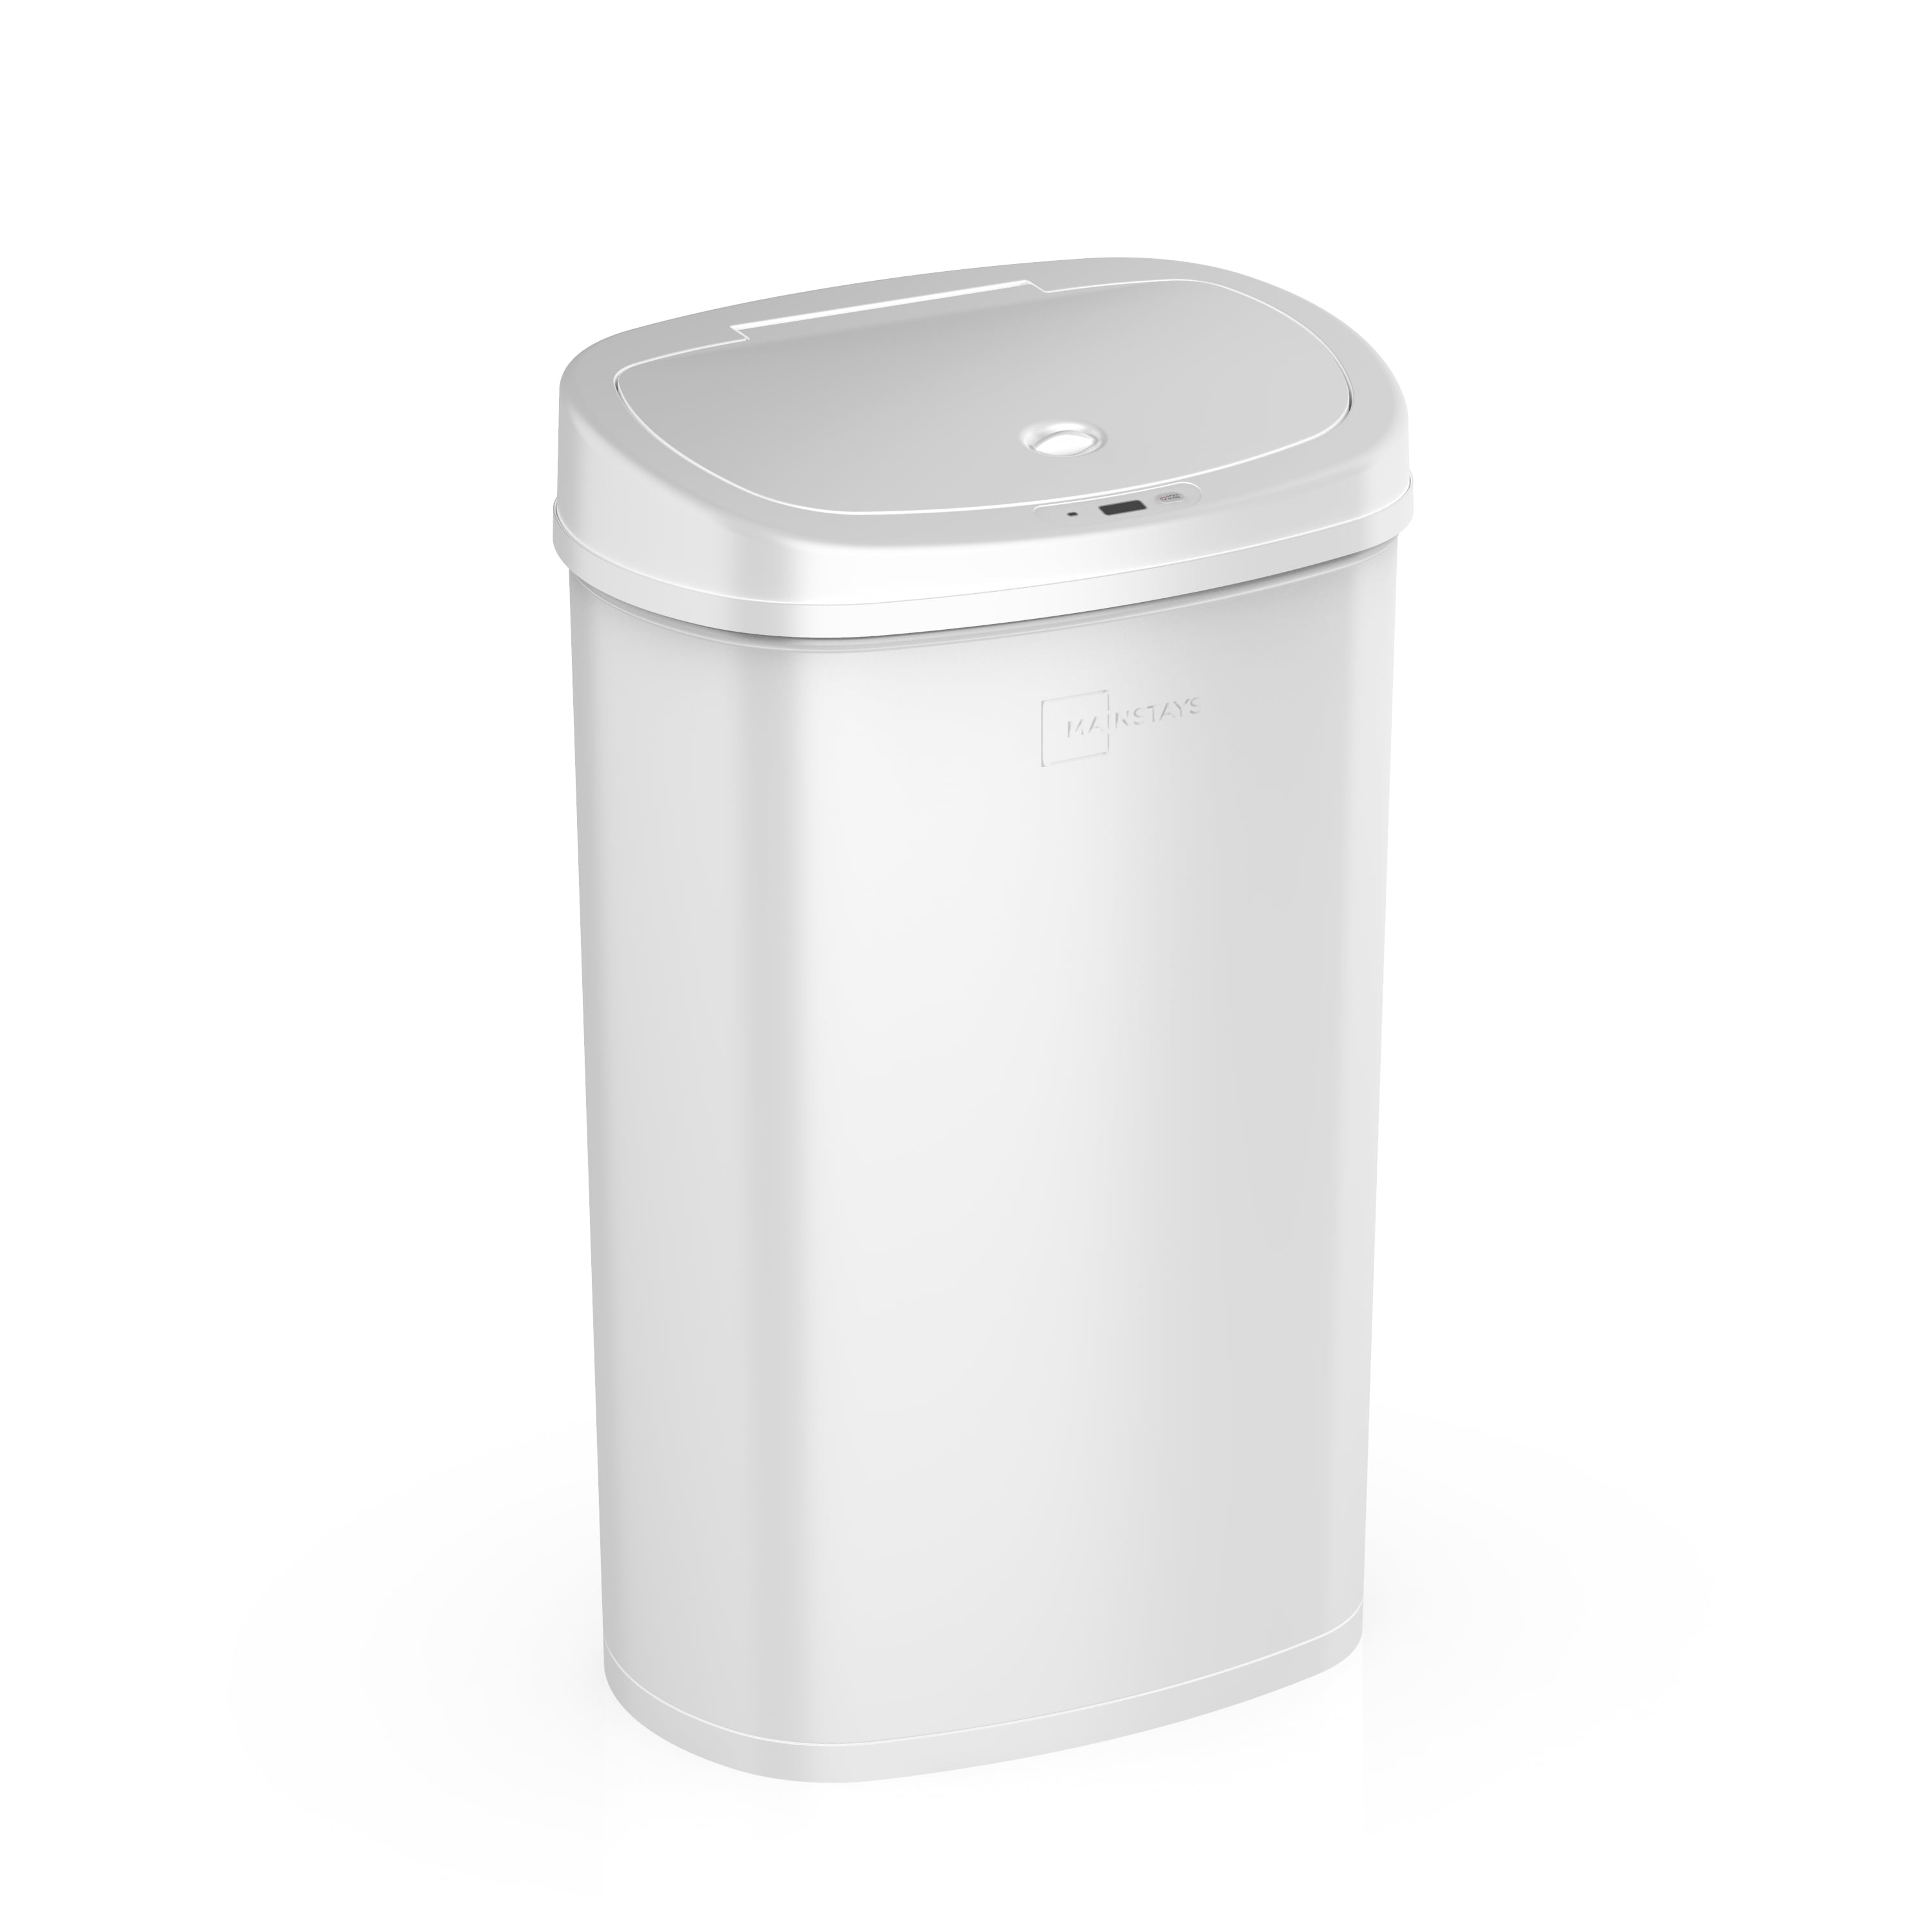 Mainstays 13.2 Gallon Trash Can, Motion Sensor Kitchen Trash Can